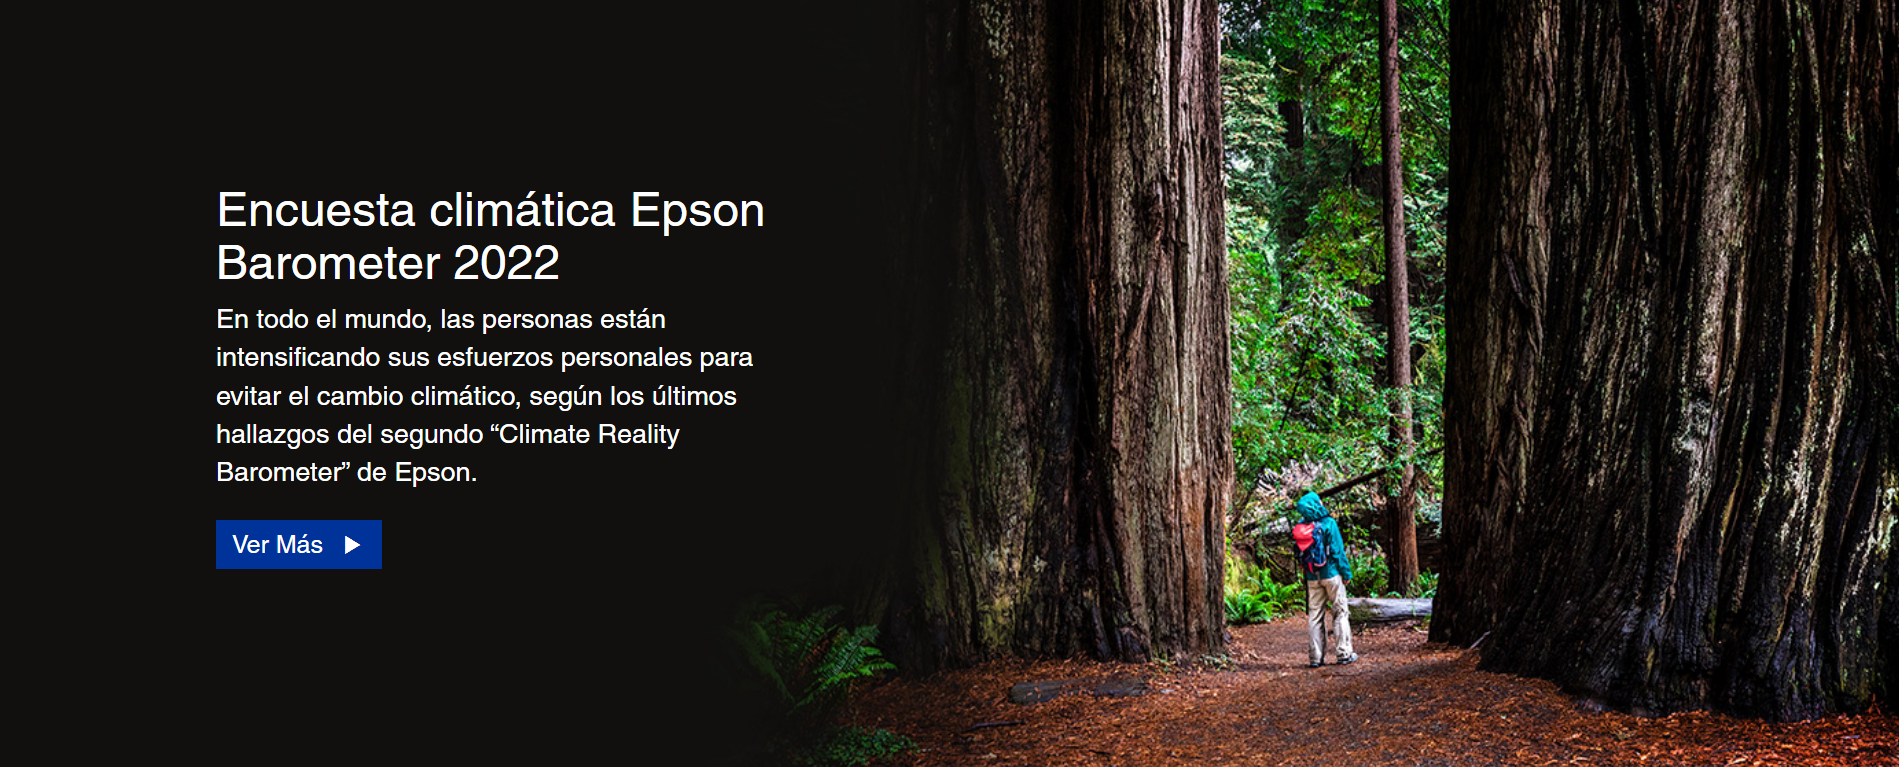 Sitio web del fabricante Epson.